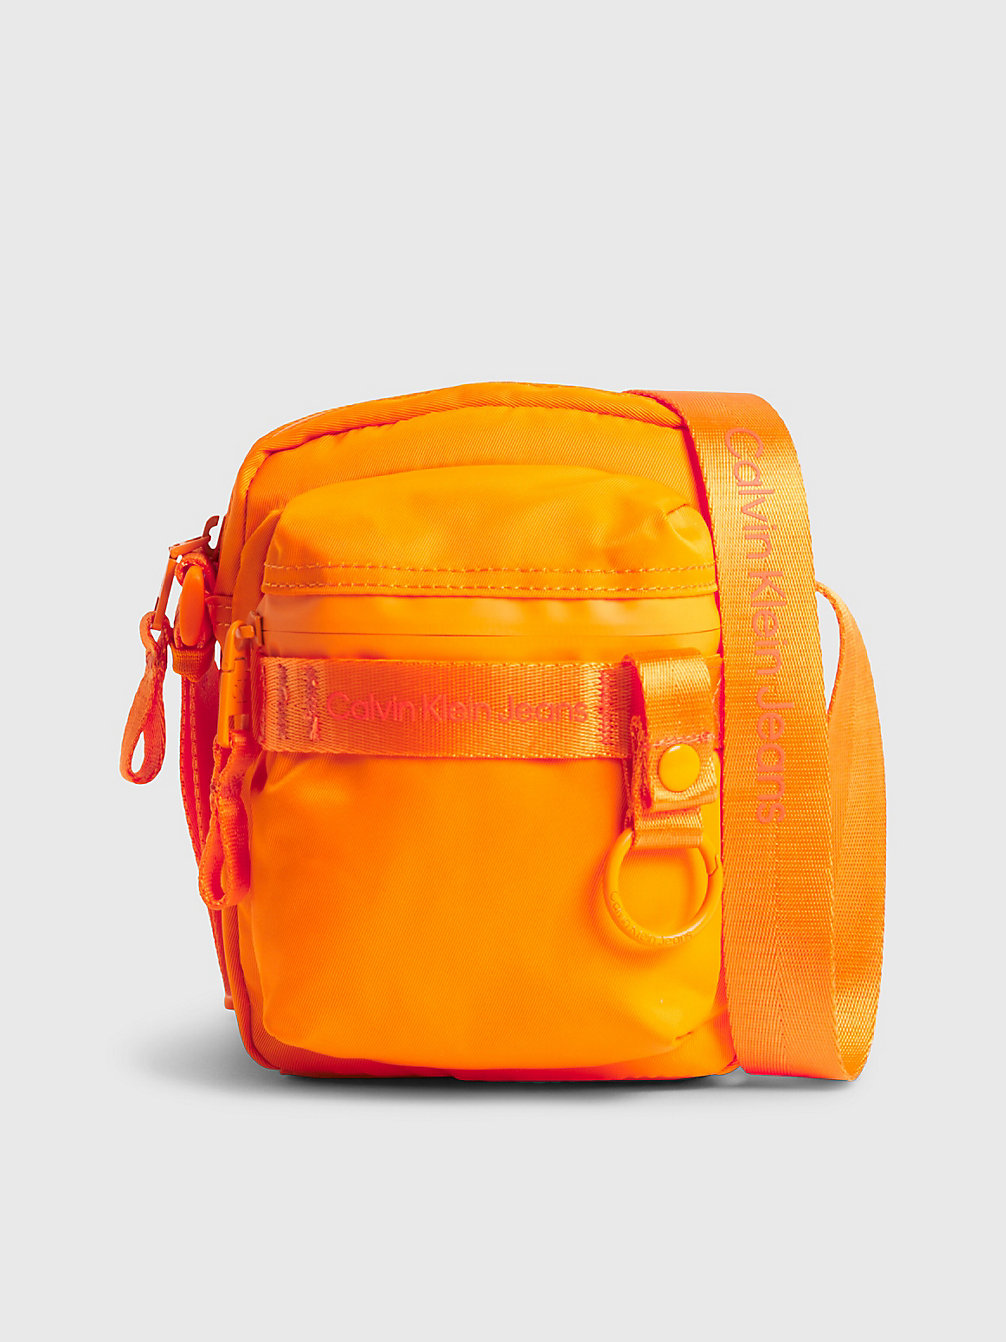 VIBRANT ORANGE Recycled Reporter Bag undefined men Calvin Klein